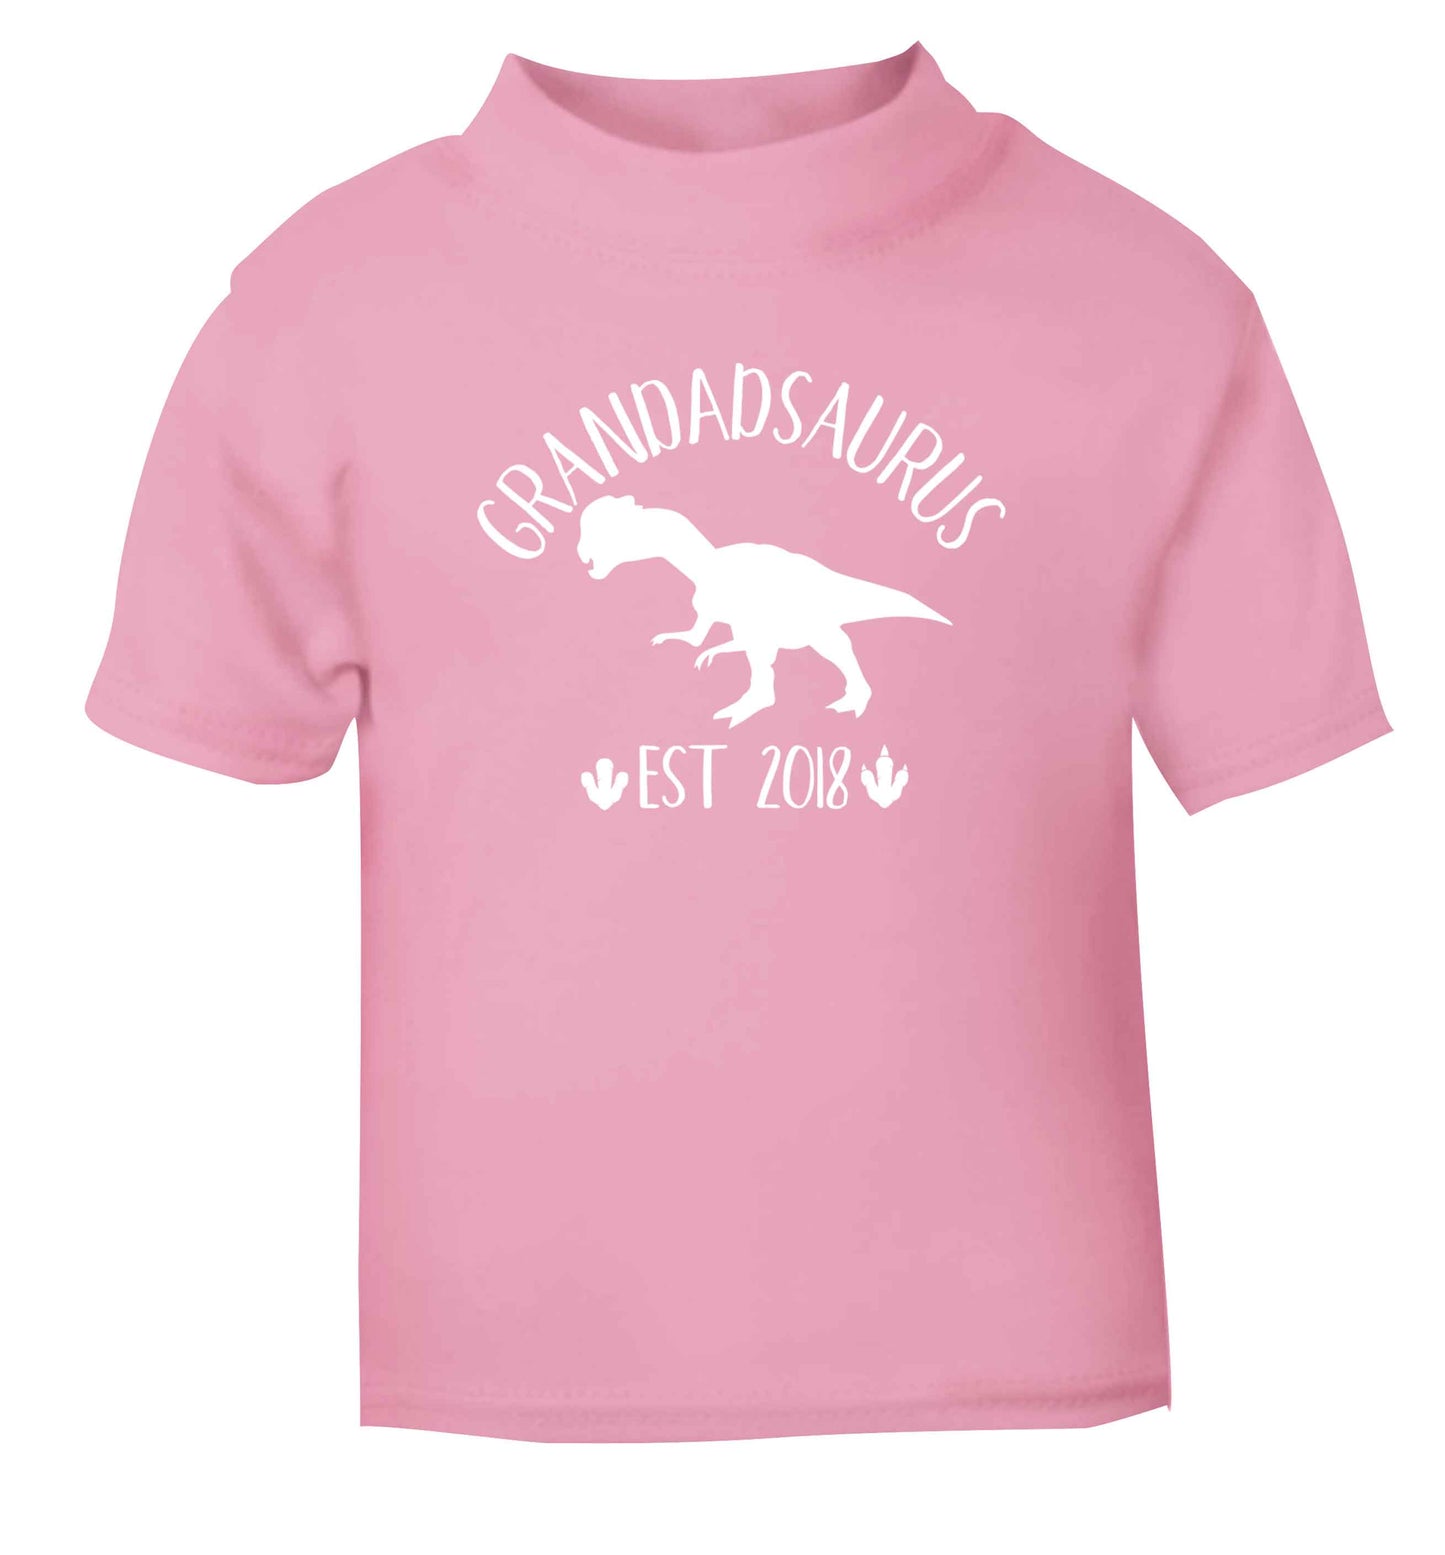 Personalised grandadsaurus since (custom date) light pink Baby Toddler Tshirt 2 Years